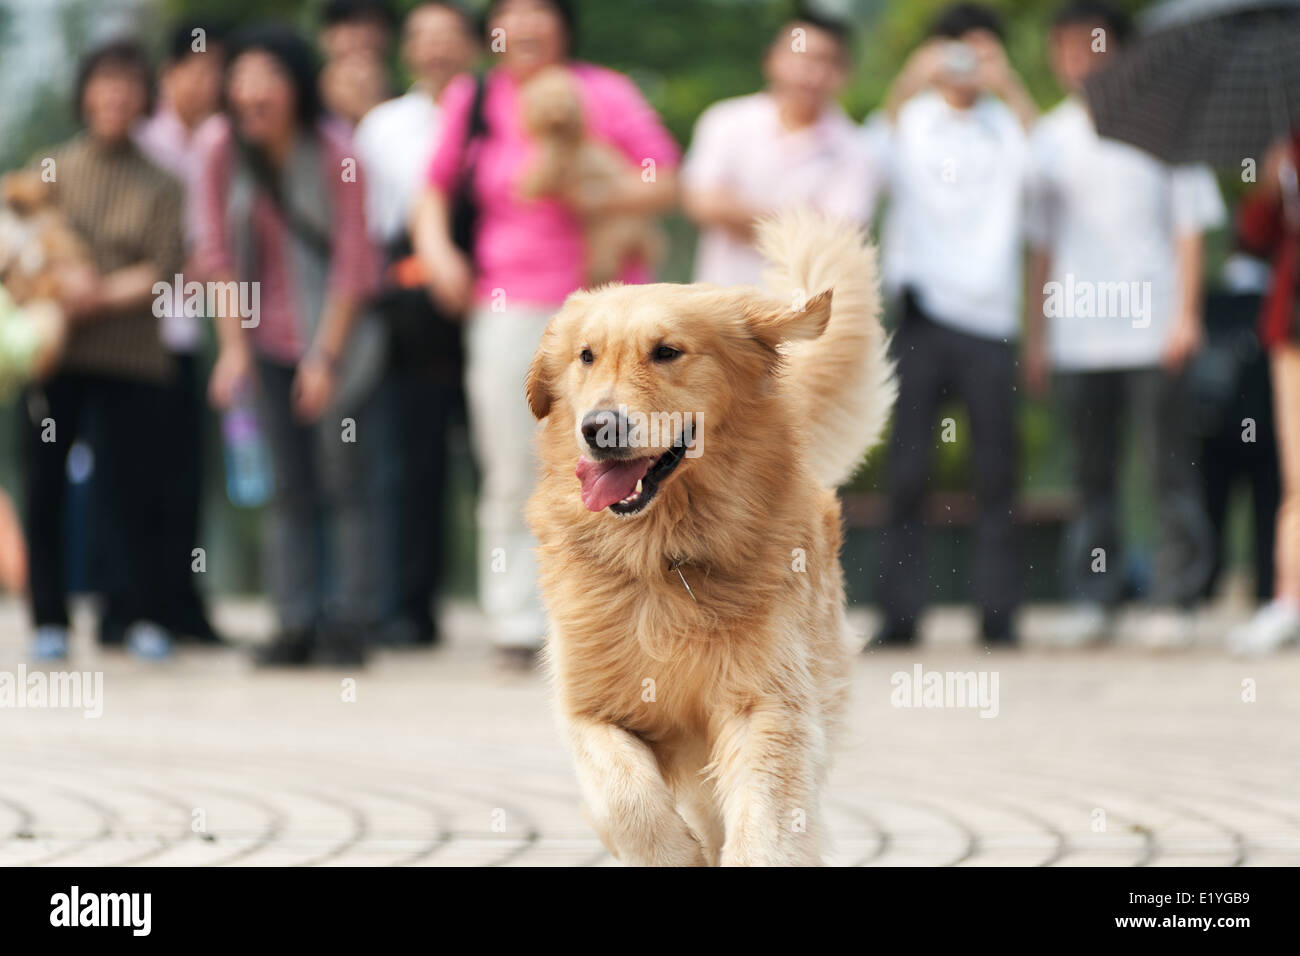 Golden retriever dog running on the ground Stock Photo